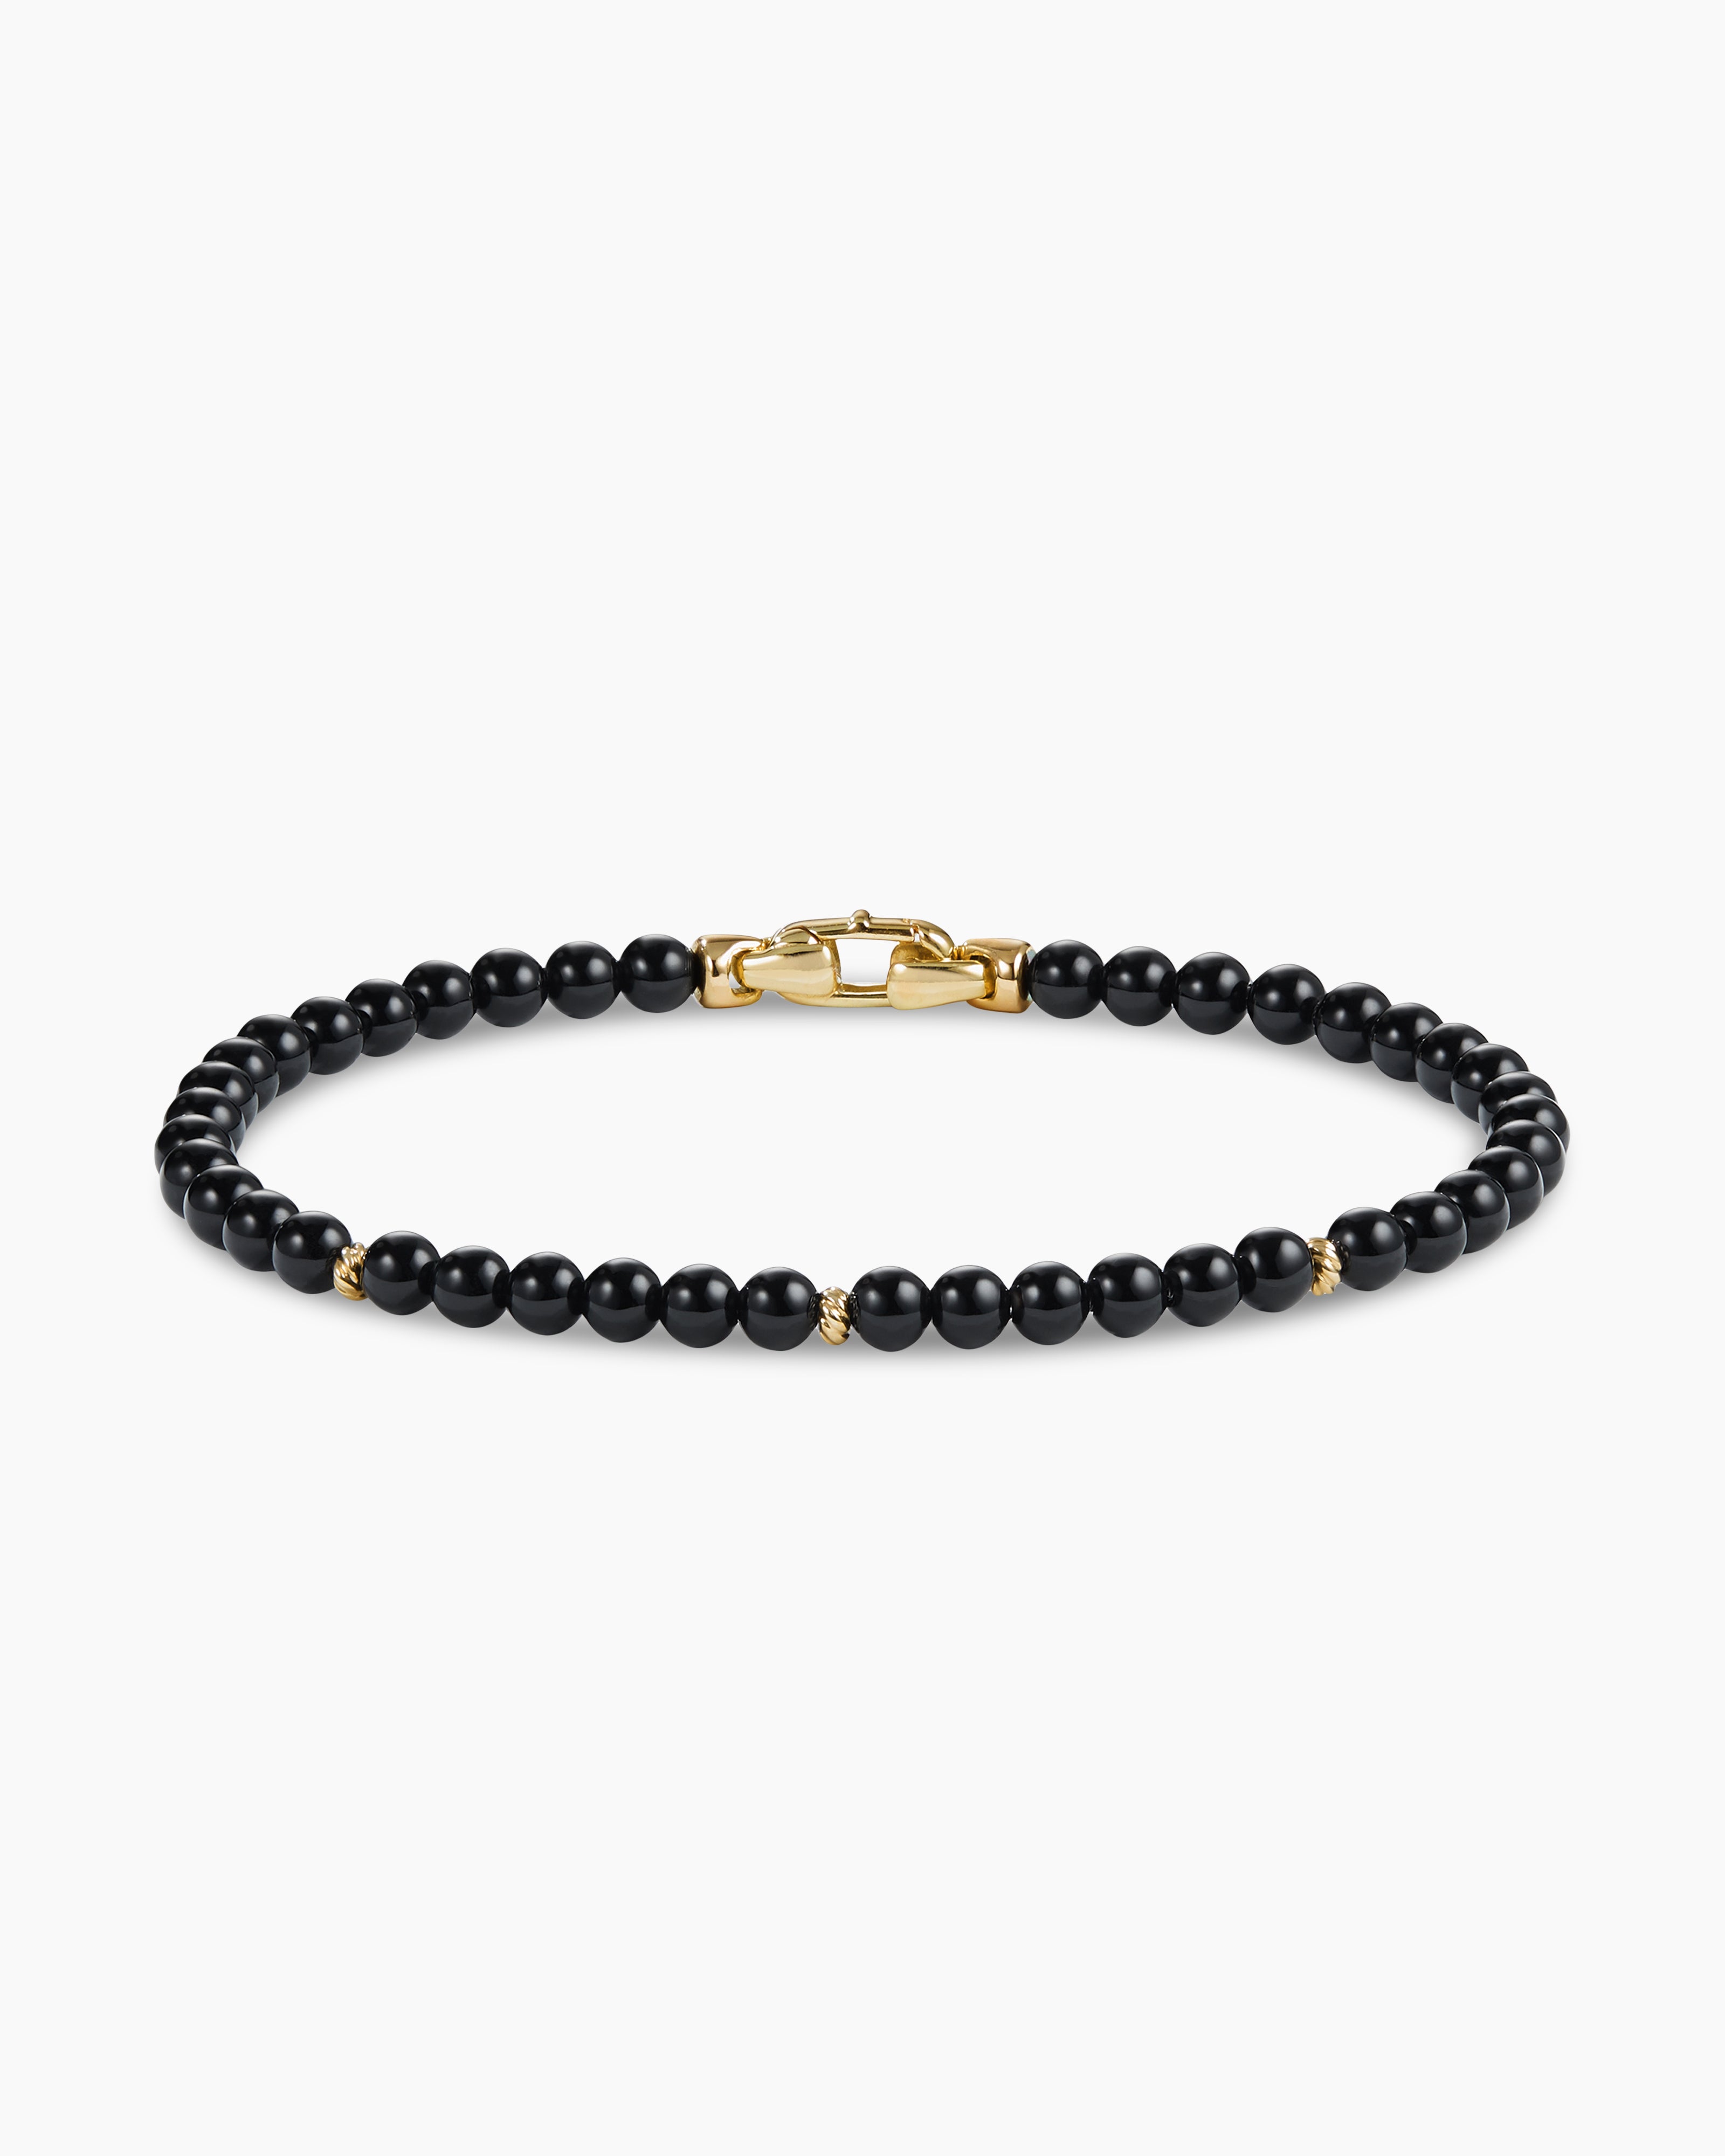 Bijoux Spiritual Beads Bracelet with 14K Yellow Gold, 4mm